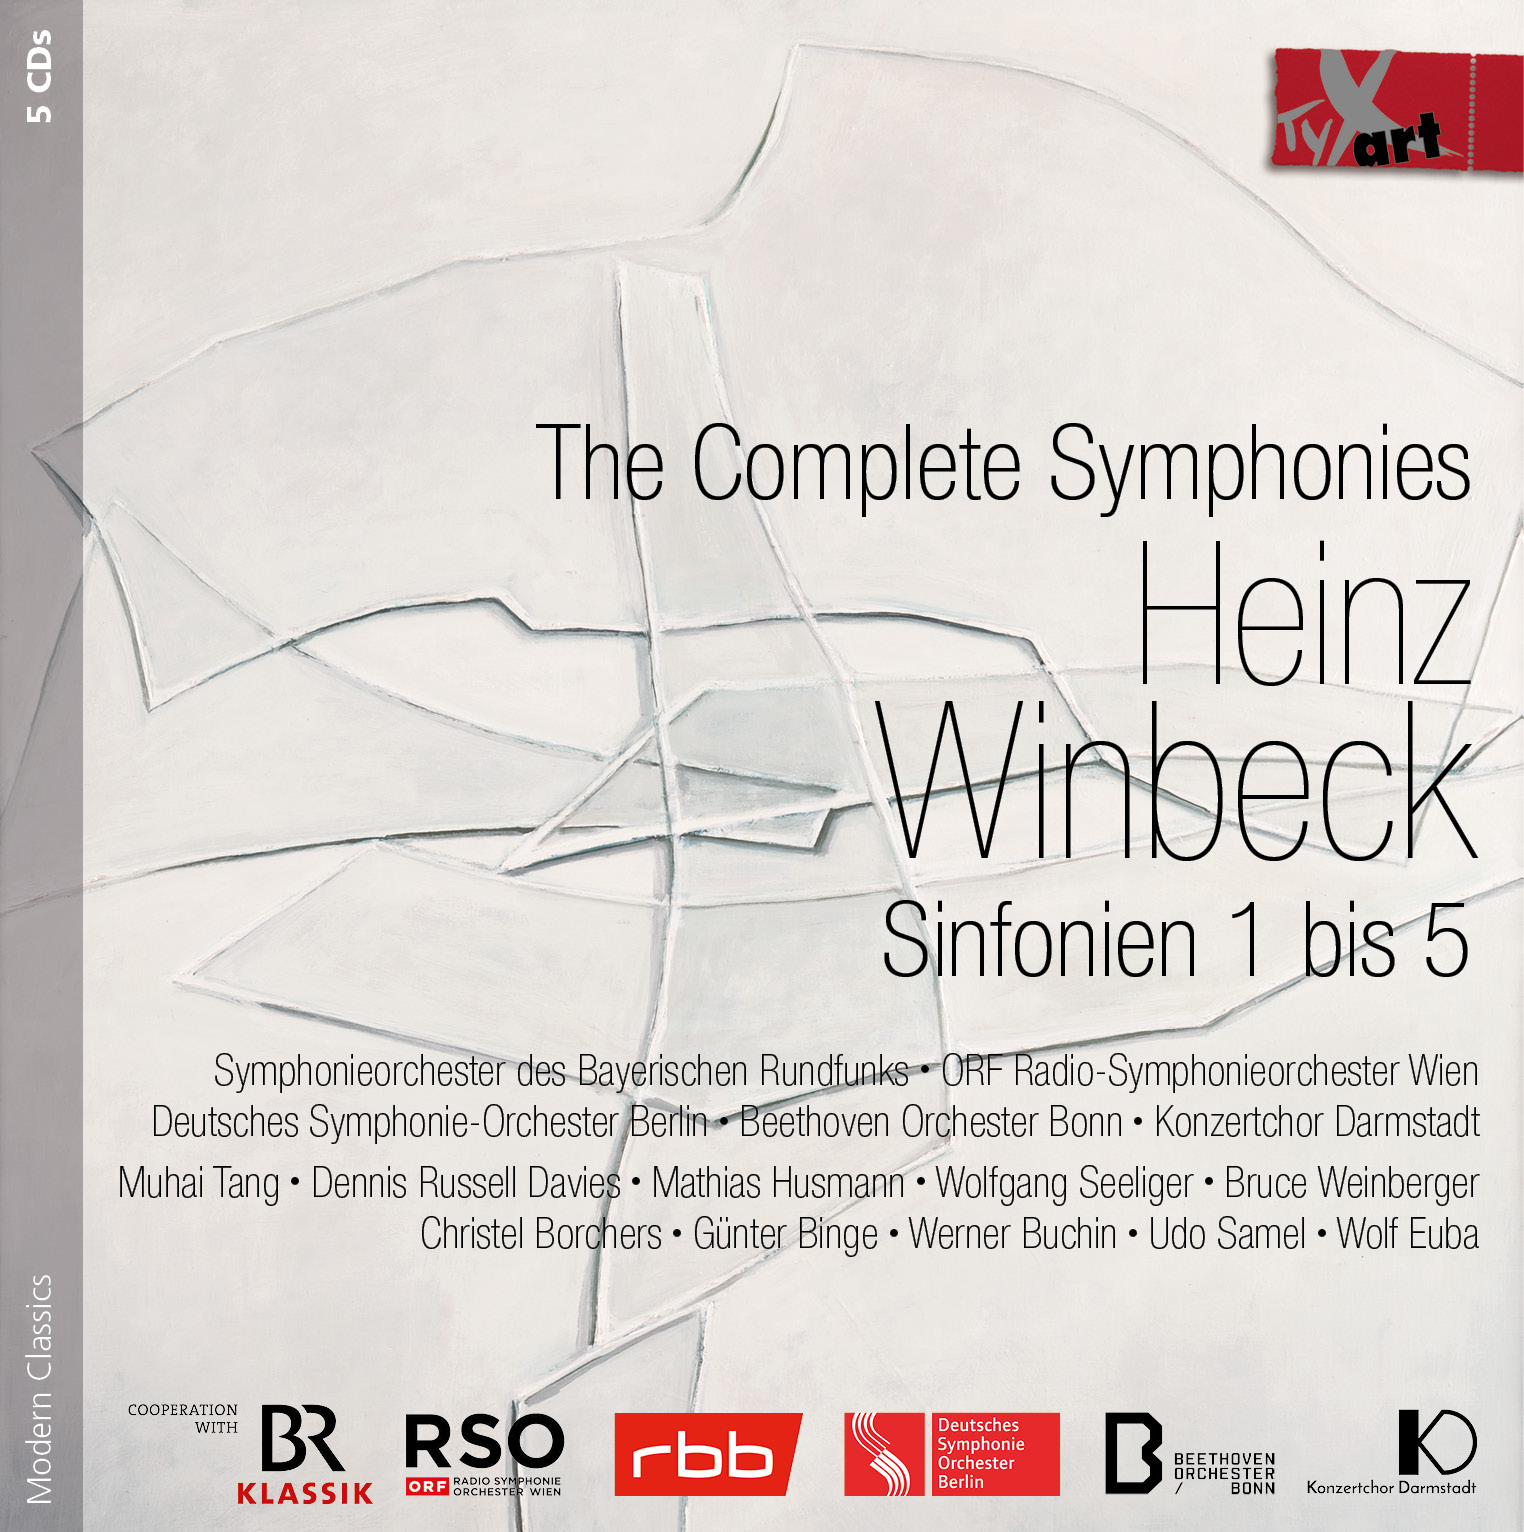 Heinz Winbeck: The Complete Symphonies (1-5)